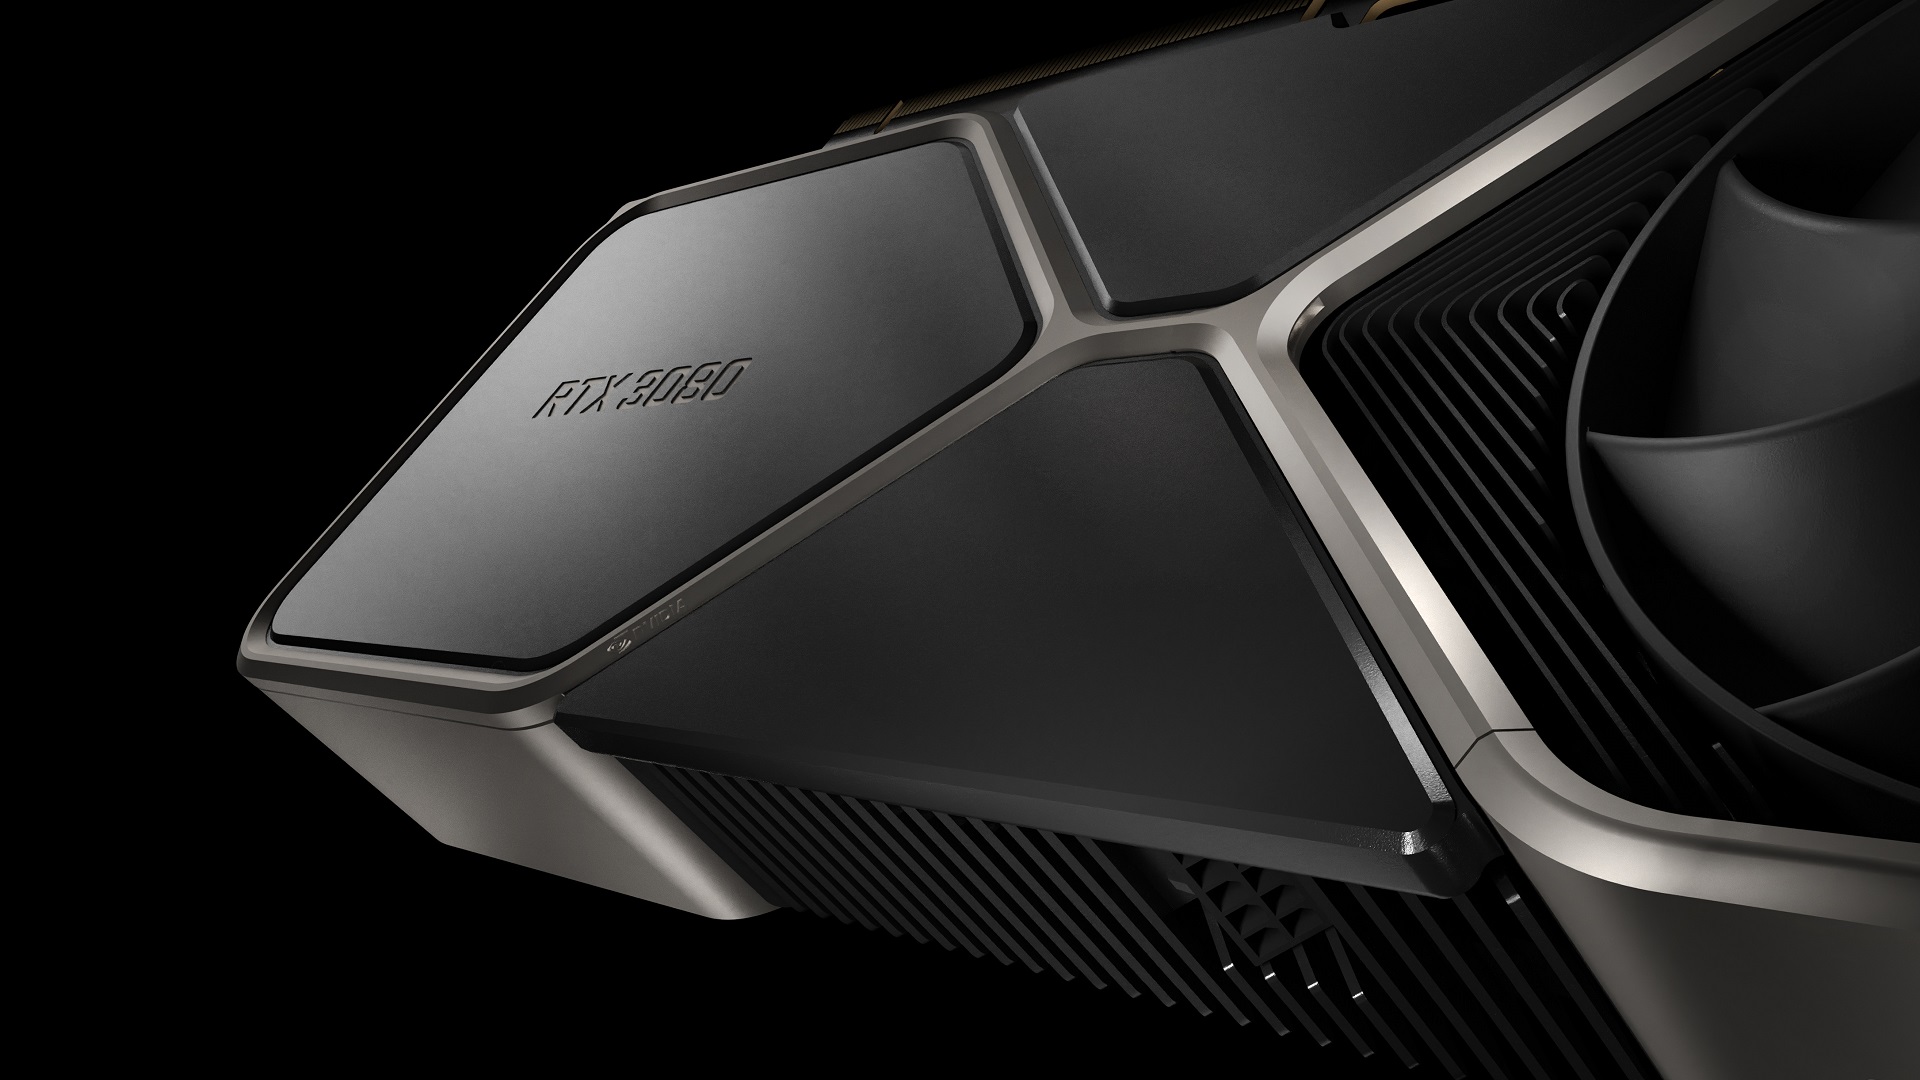 Geforce Rtx 3080 هو الجيل القادم الجديد من وحدة معالجة الرسومات من Nvidia